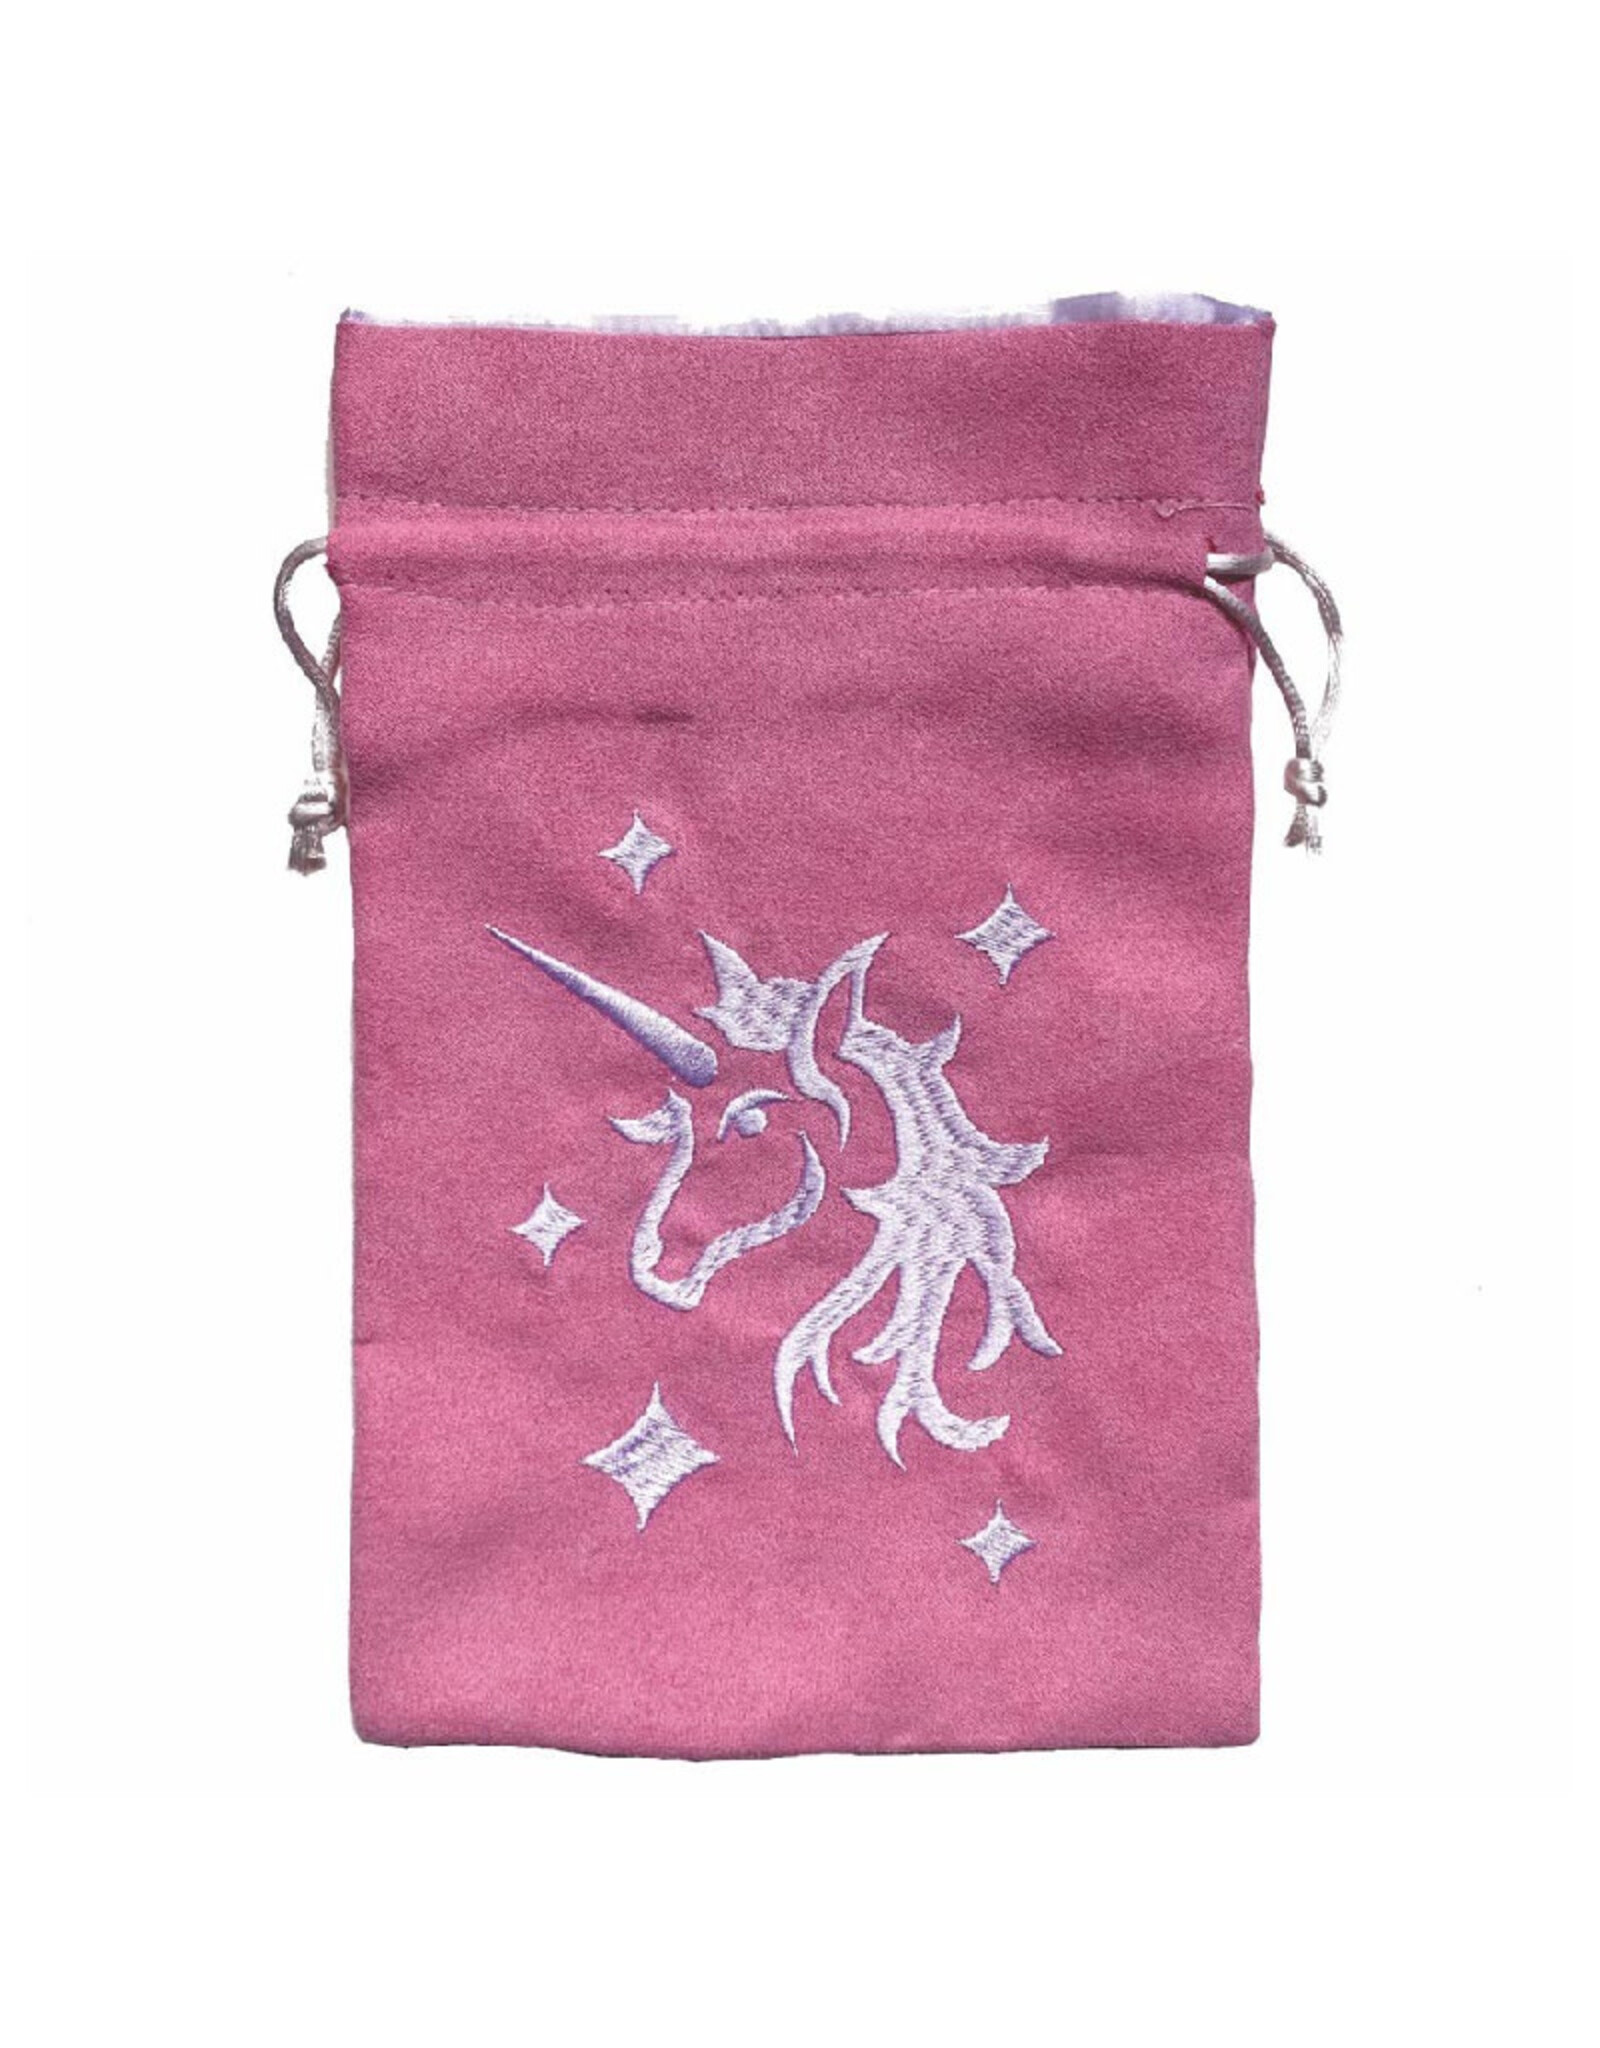 Misc Dice Bag: Pink Unicorn